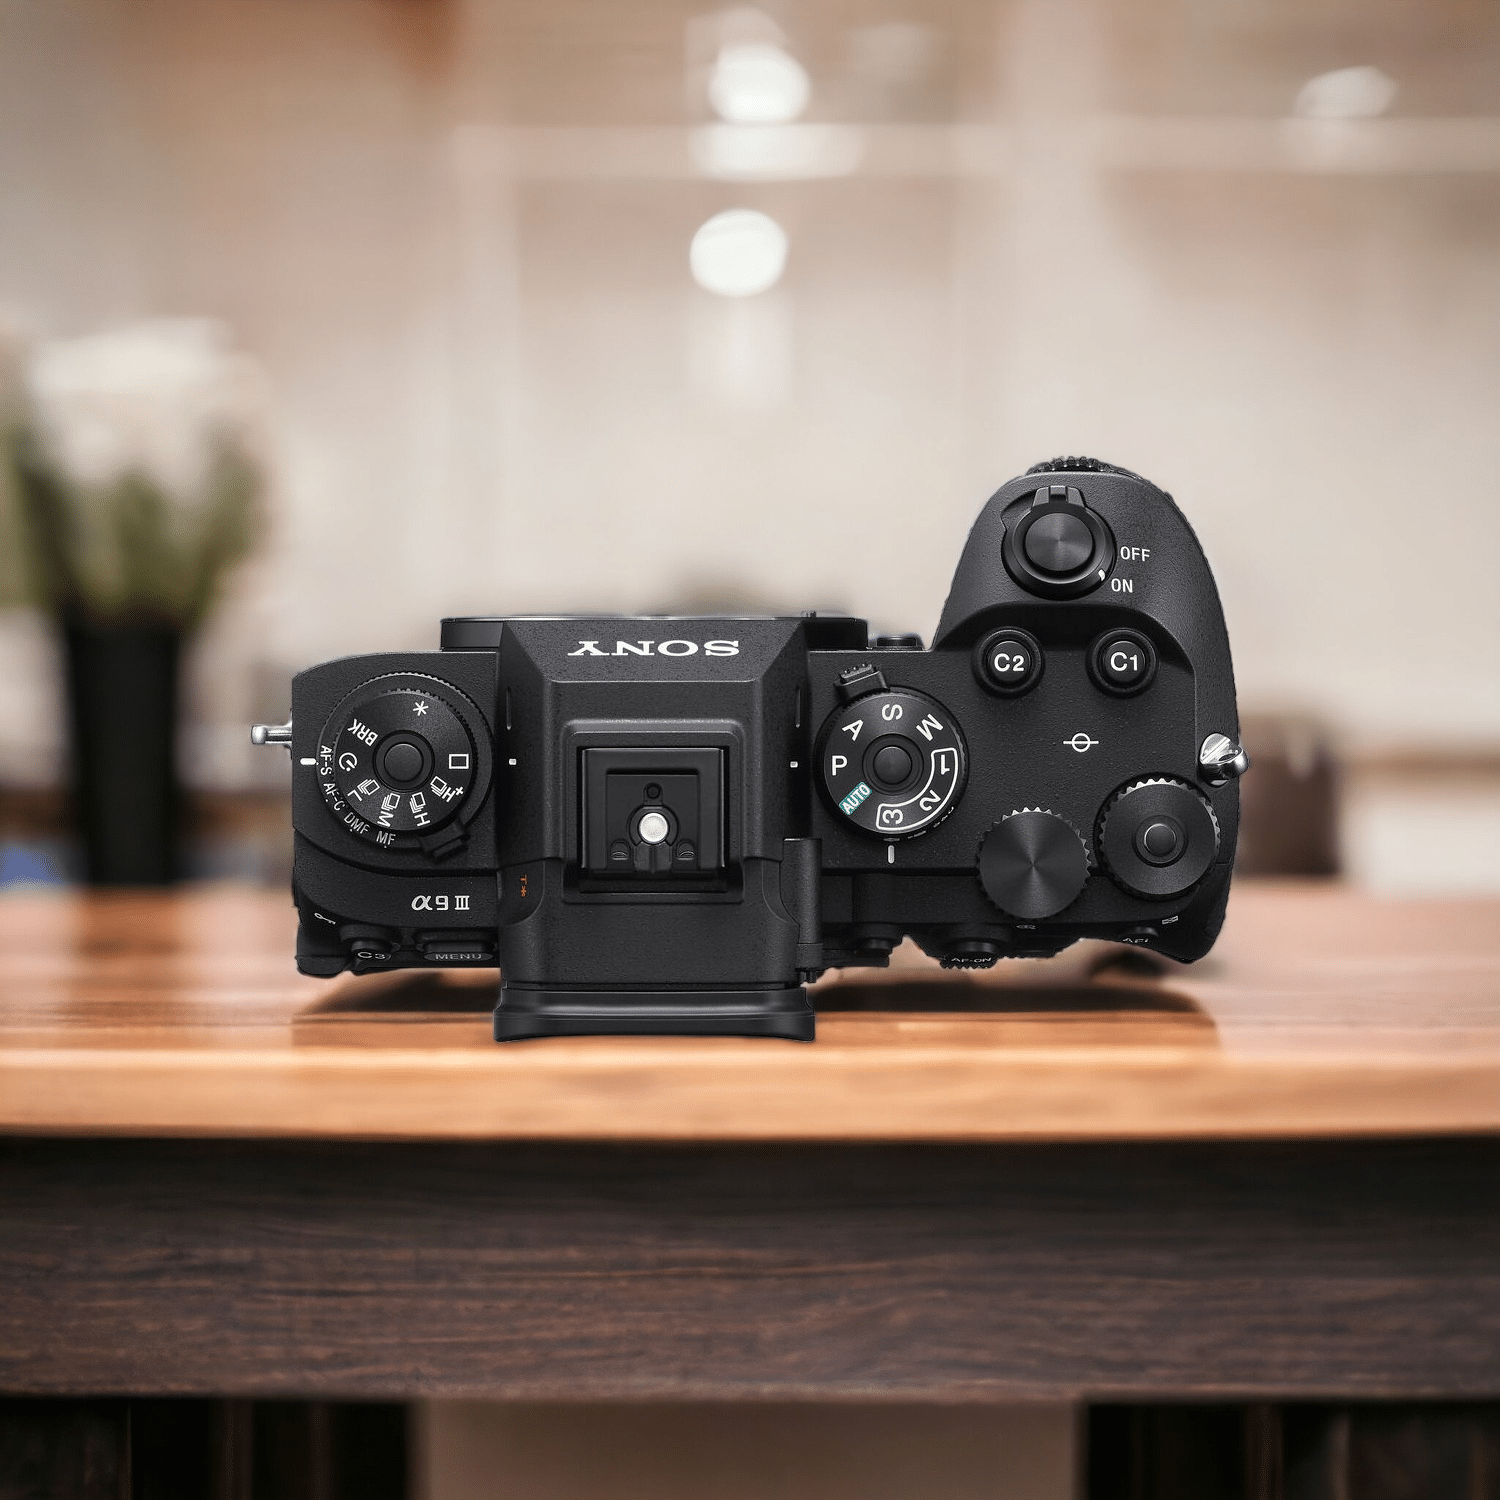 molettes de l'appareil photo hybride Sony A9 III